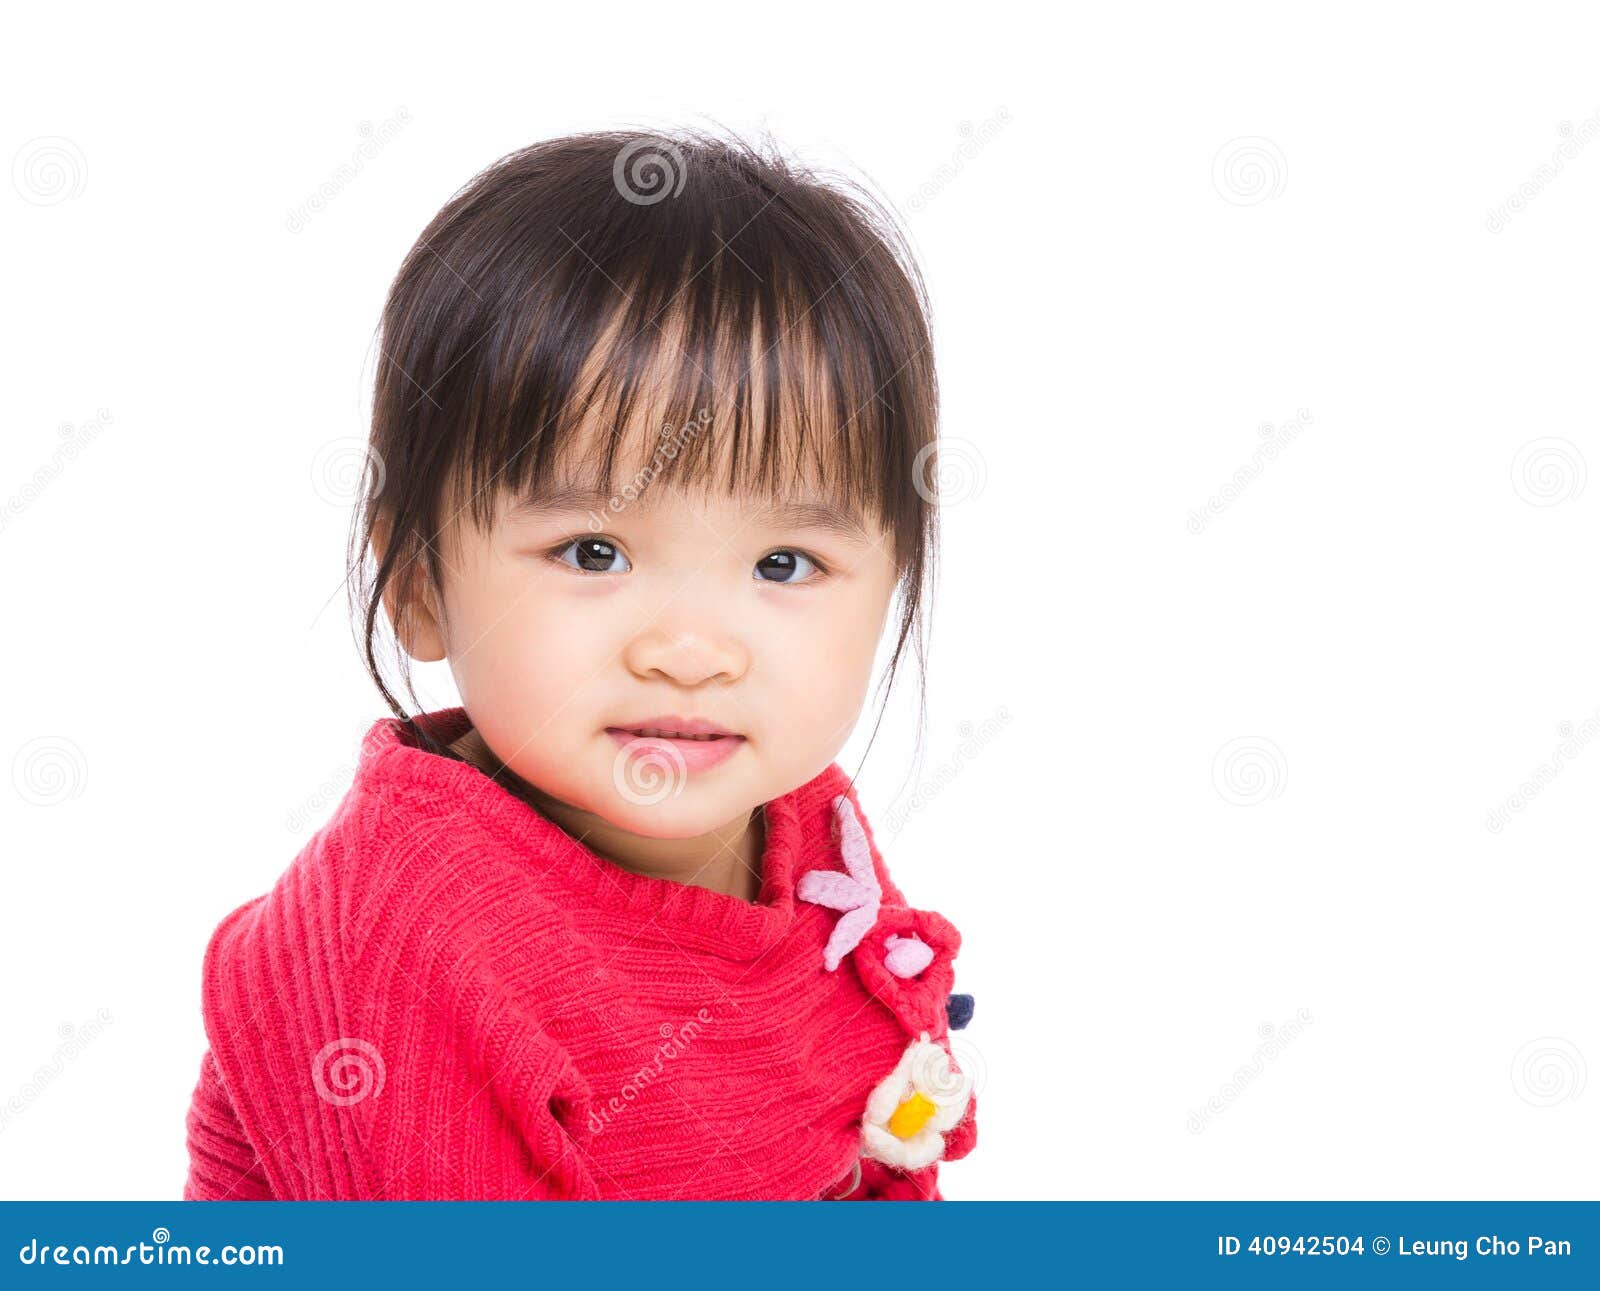 Asia little girl portrait stock photo. Image of beautiful - 40942504